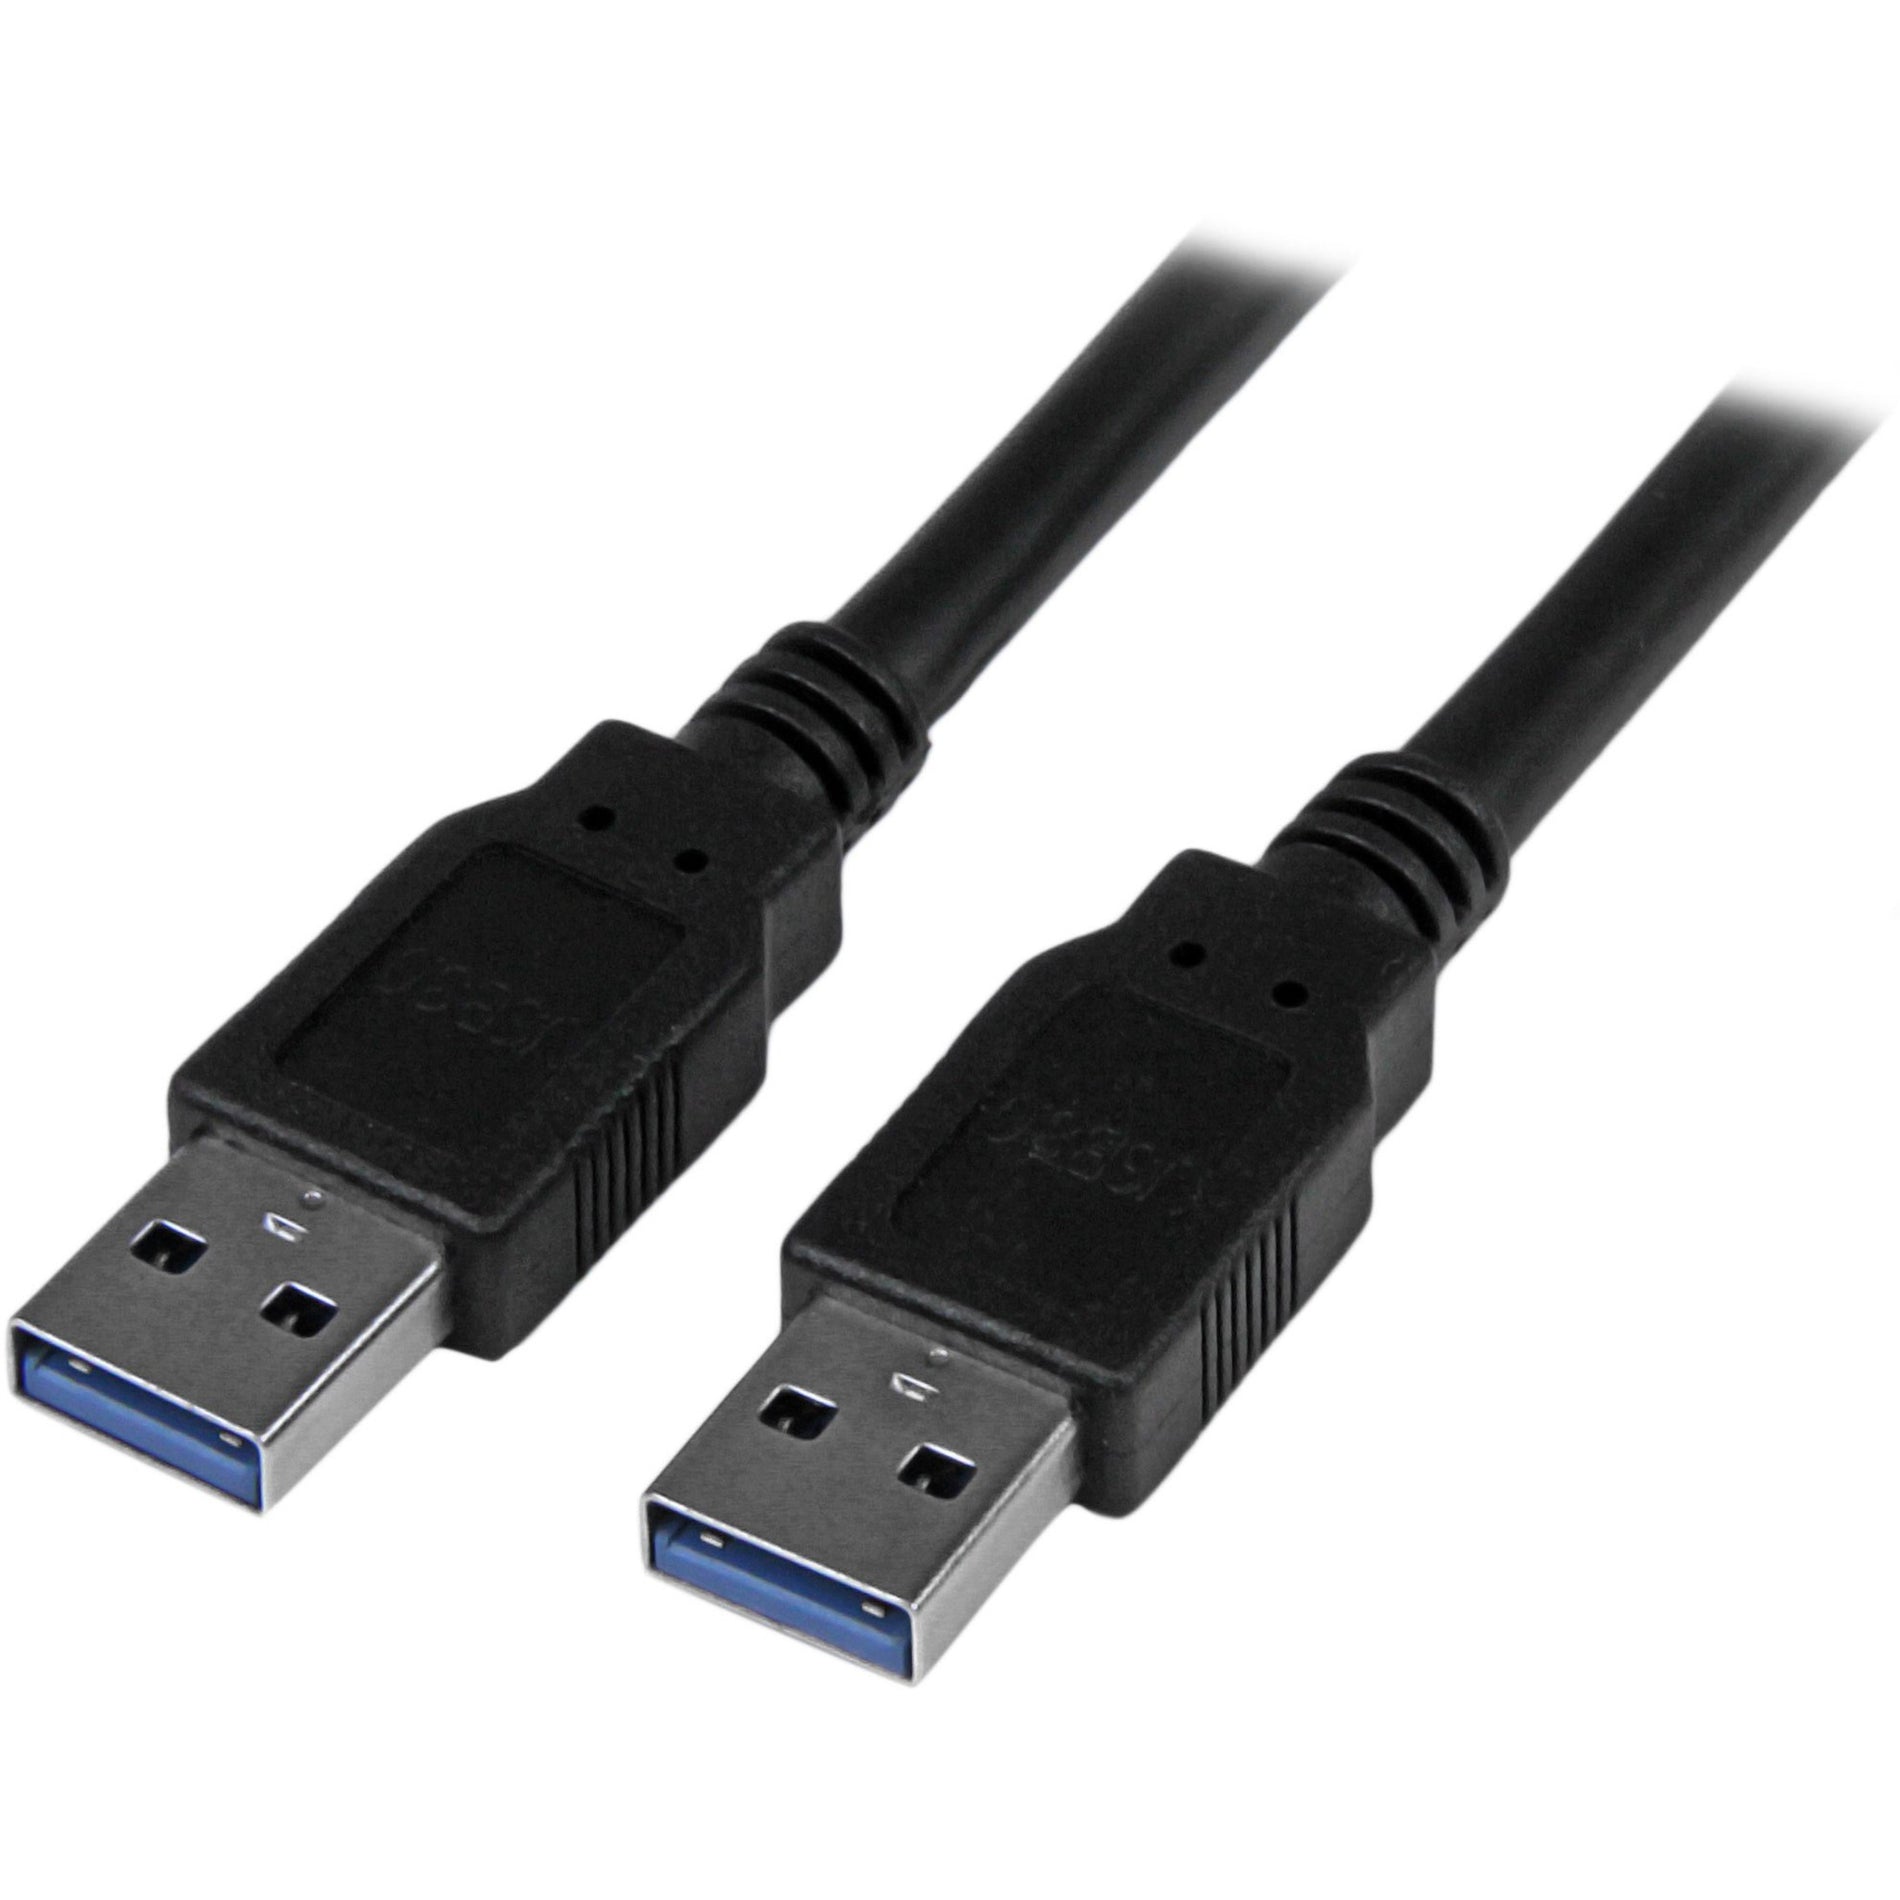 StarTech.com Cable de transferencia de datos USB USB3SAA3MBK 10 pies - Cable USB 3.0 largo Velocidad de transferencia de datos de 5 Gbps